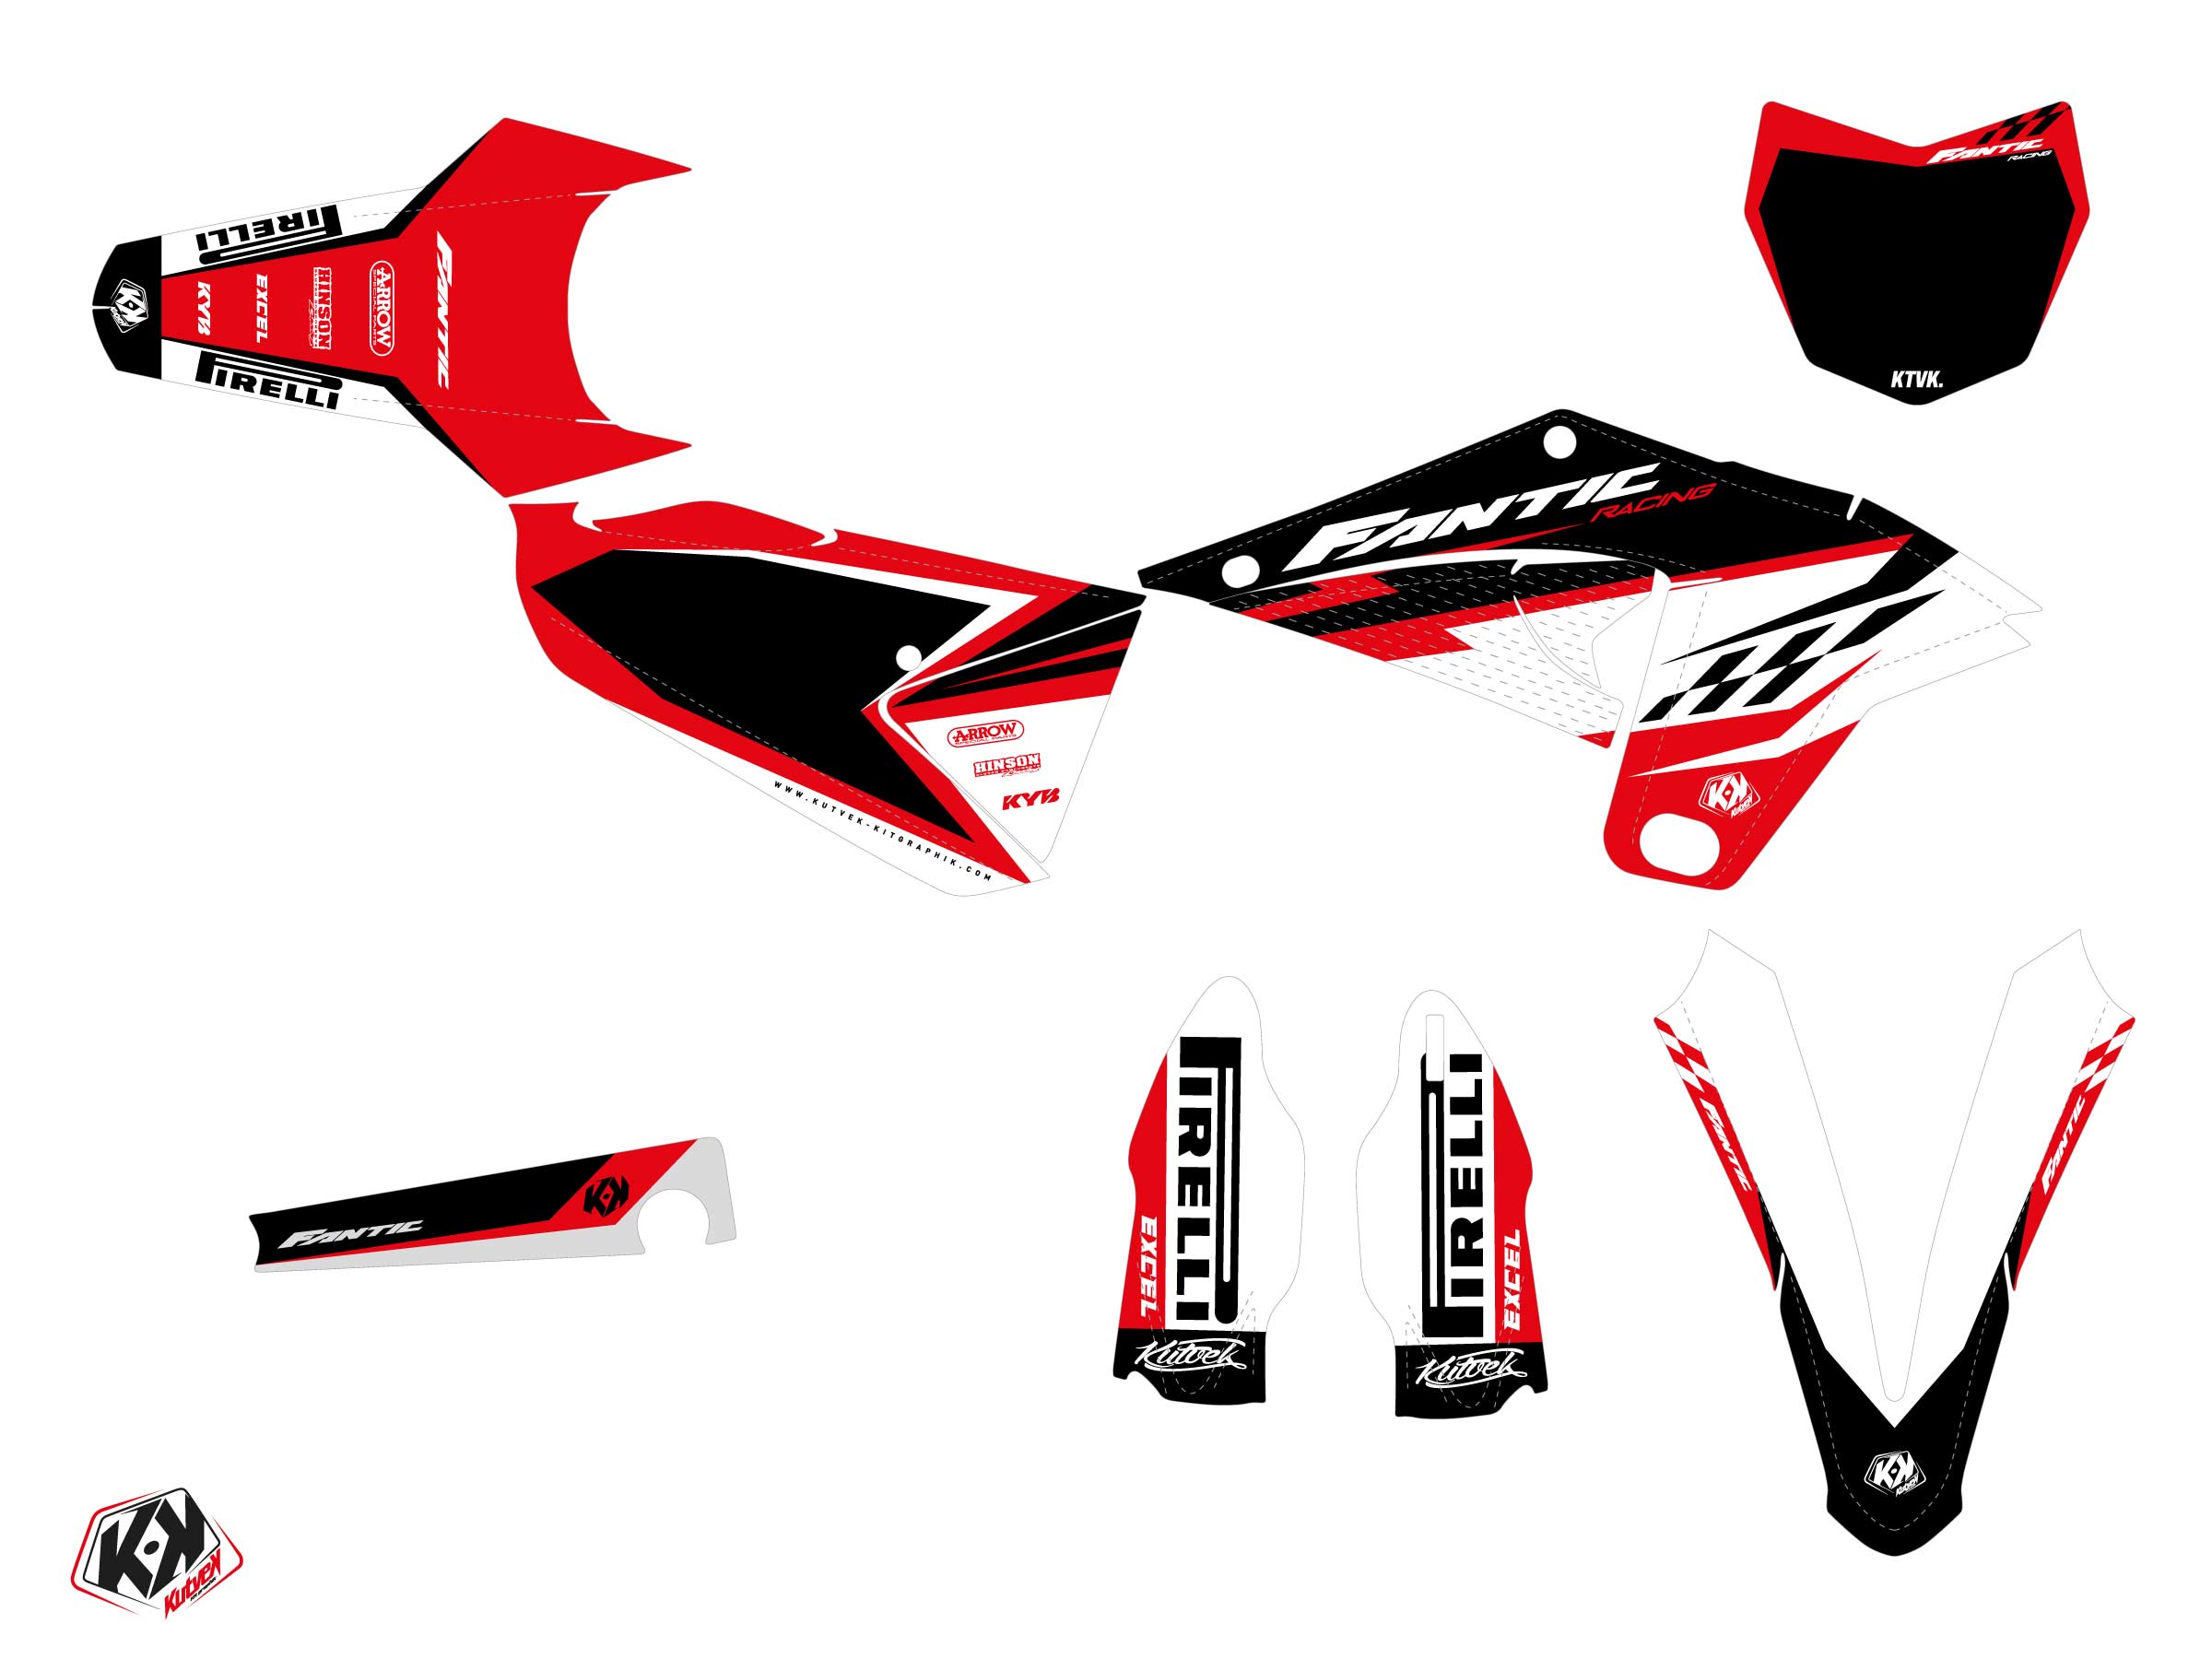 Fantic Xx 125 Dirt Bike Inkline Graphic Kit Red